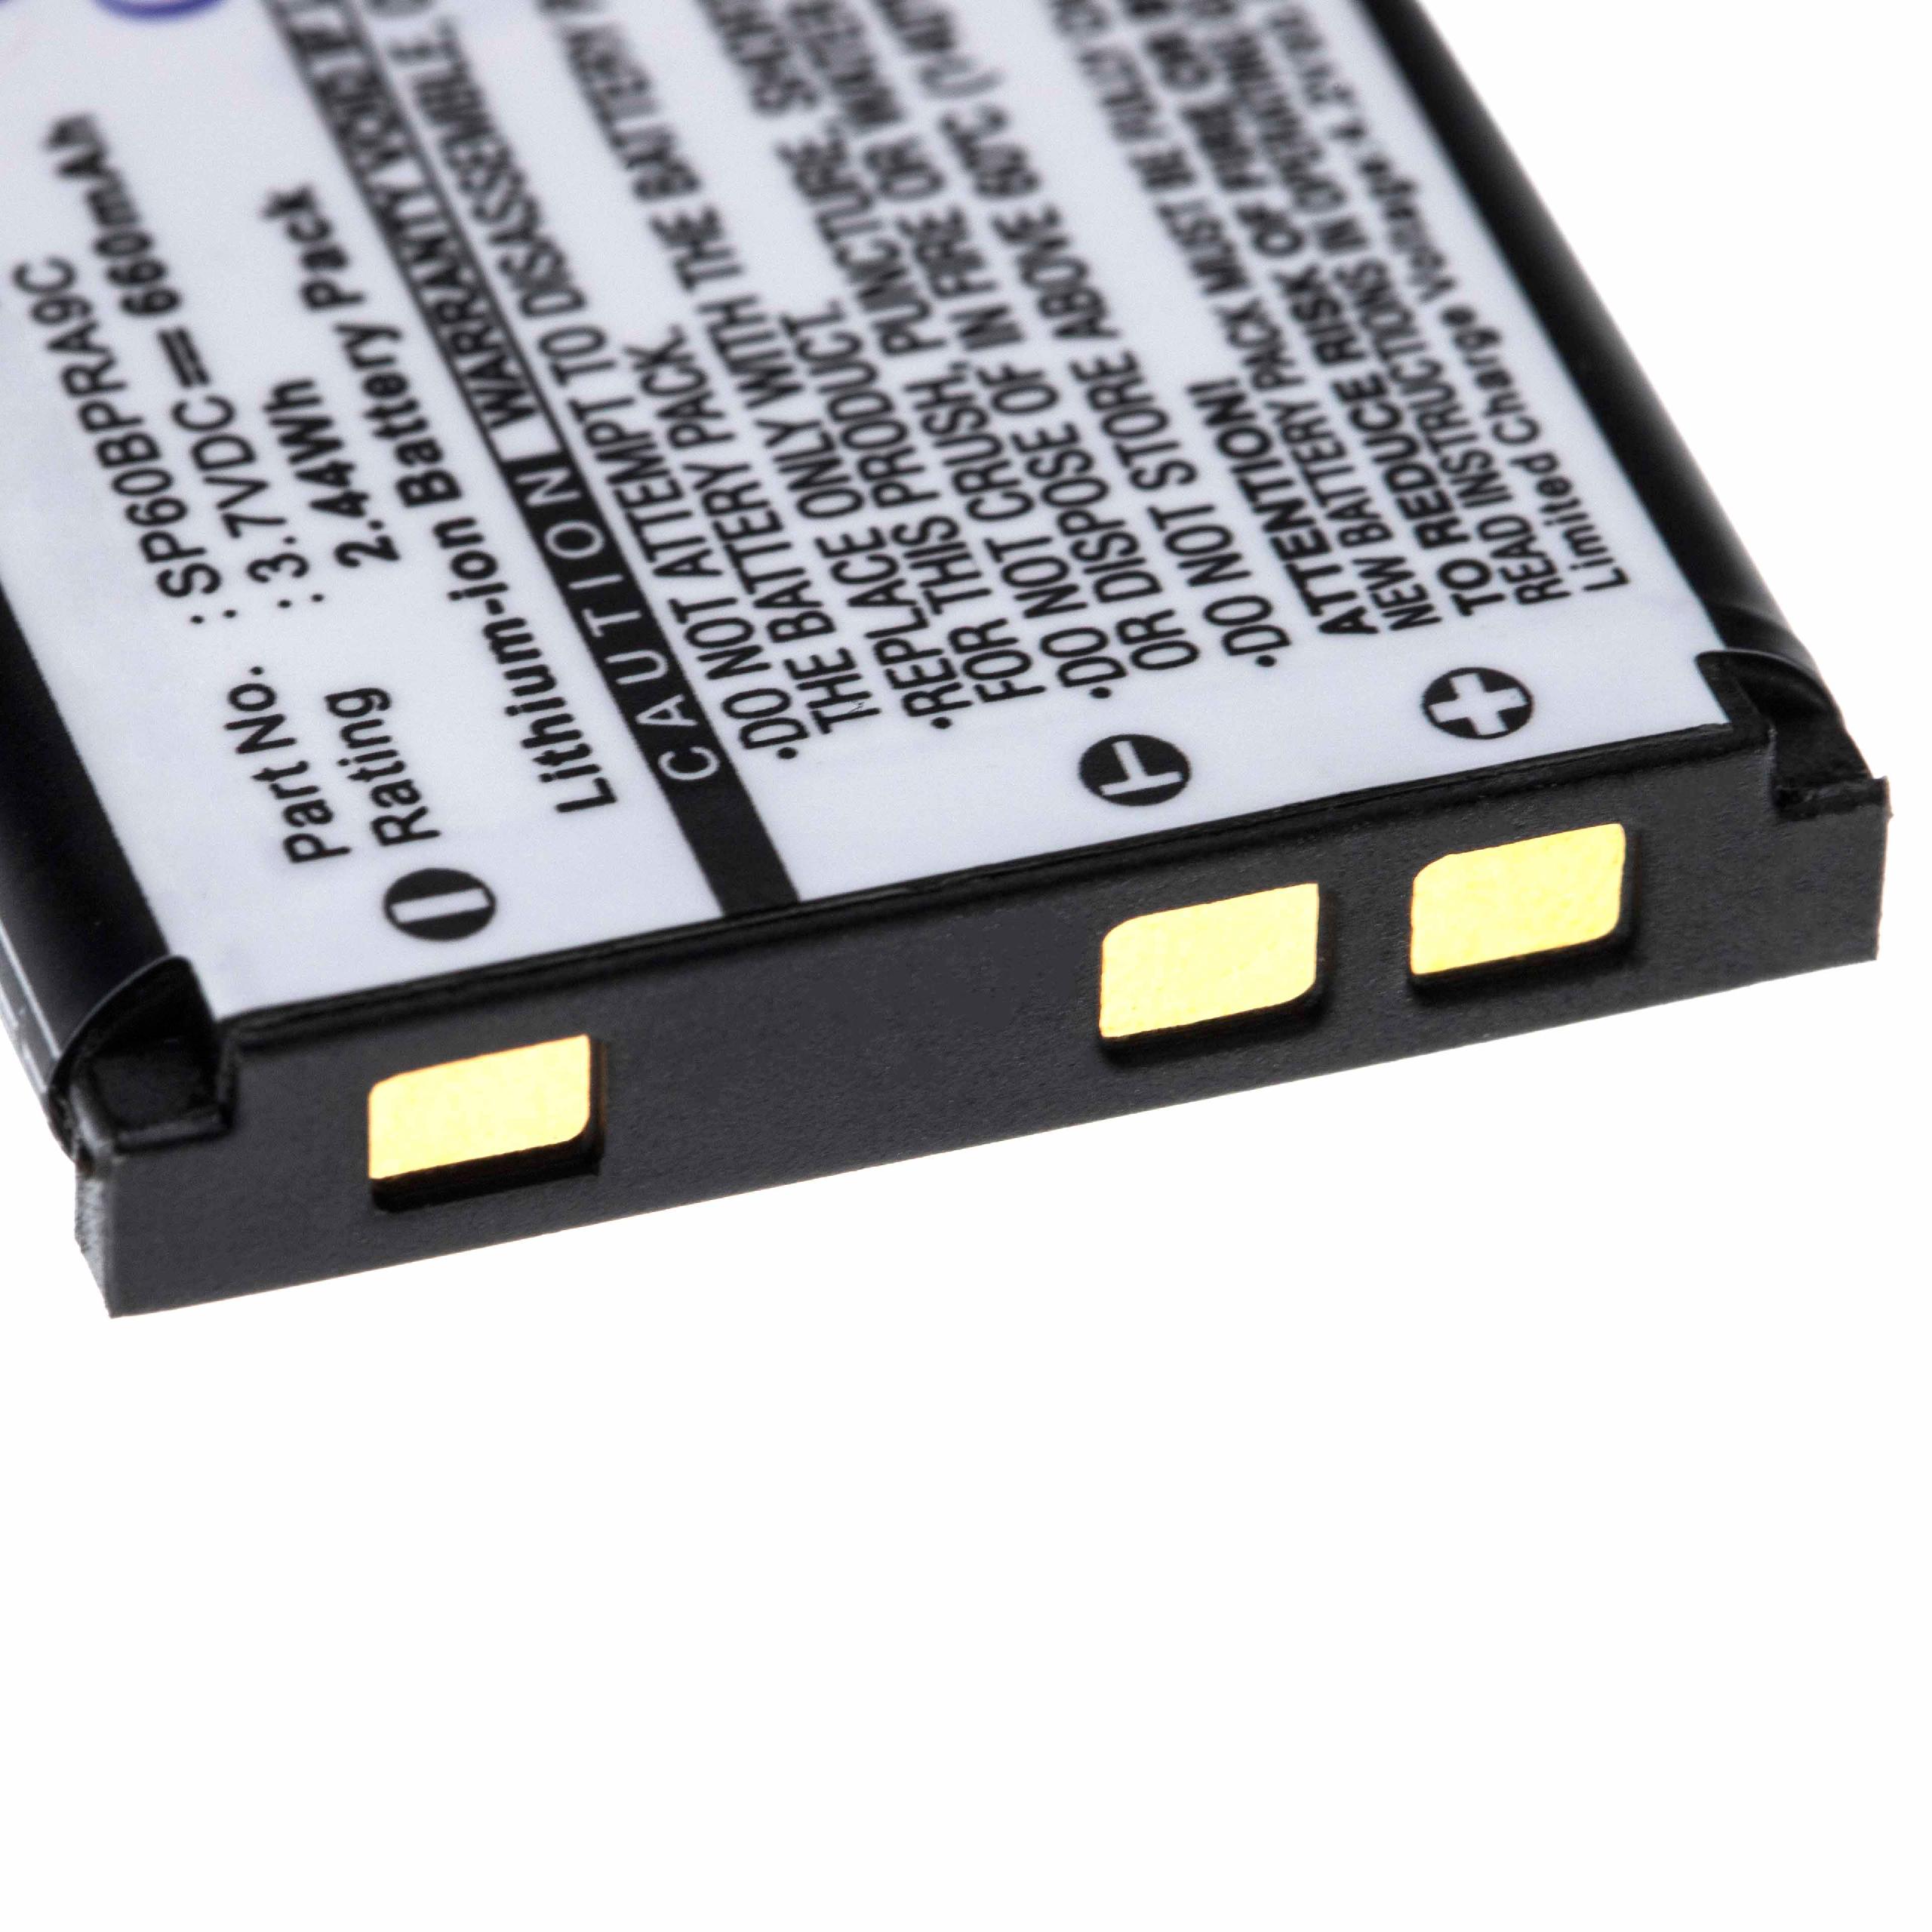 Batería reemplaza Sony SP60, 4-268-590-02, SP60BPRA9C para ratón inalámbrico Sony - 660 mAh 3,7 V Li-Ion